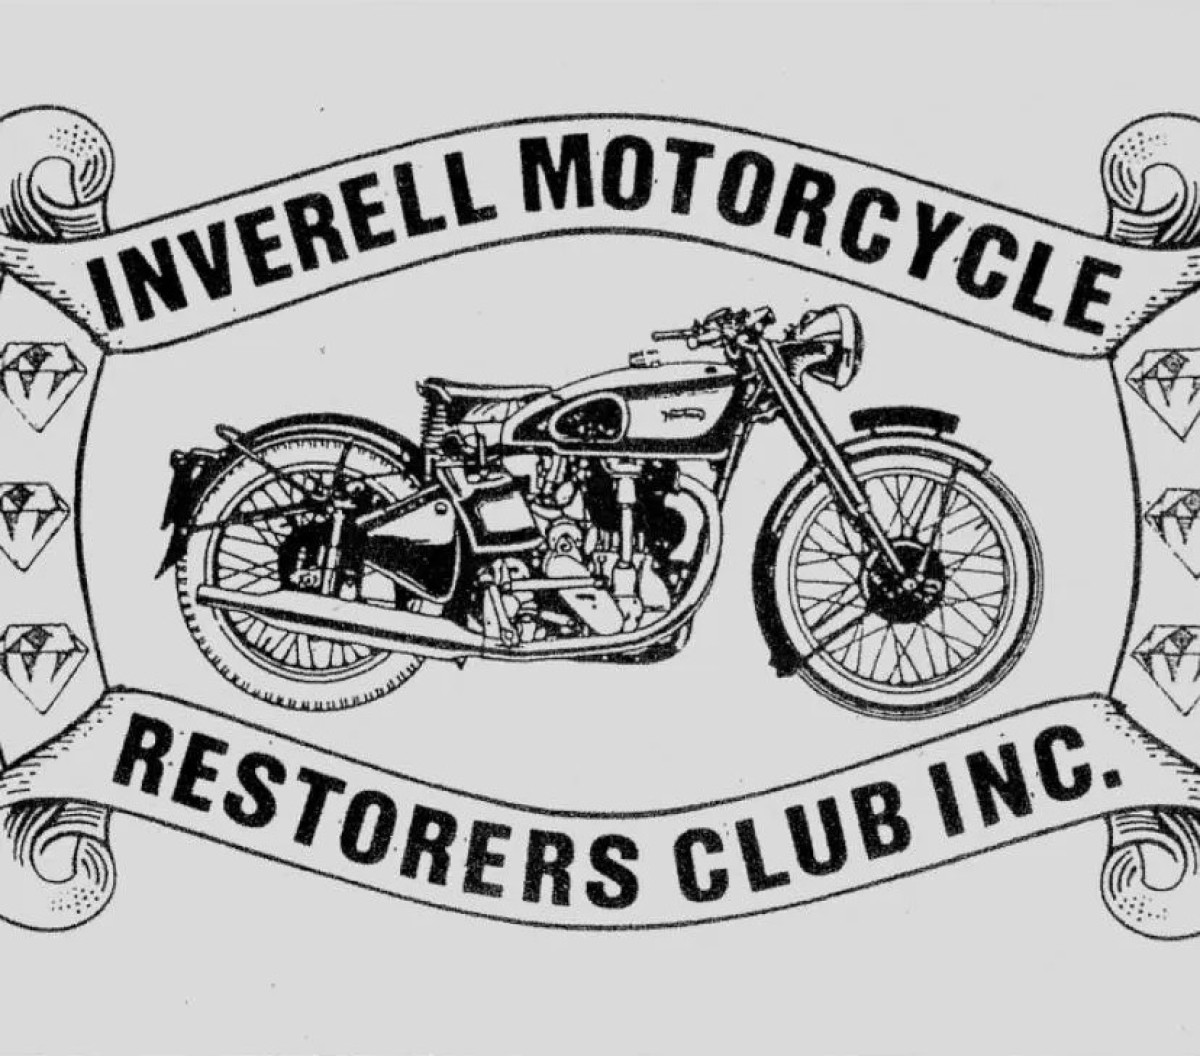 Inverell Motorcycle Restorers Club Inc